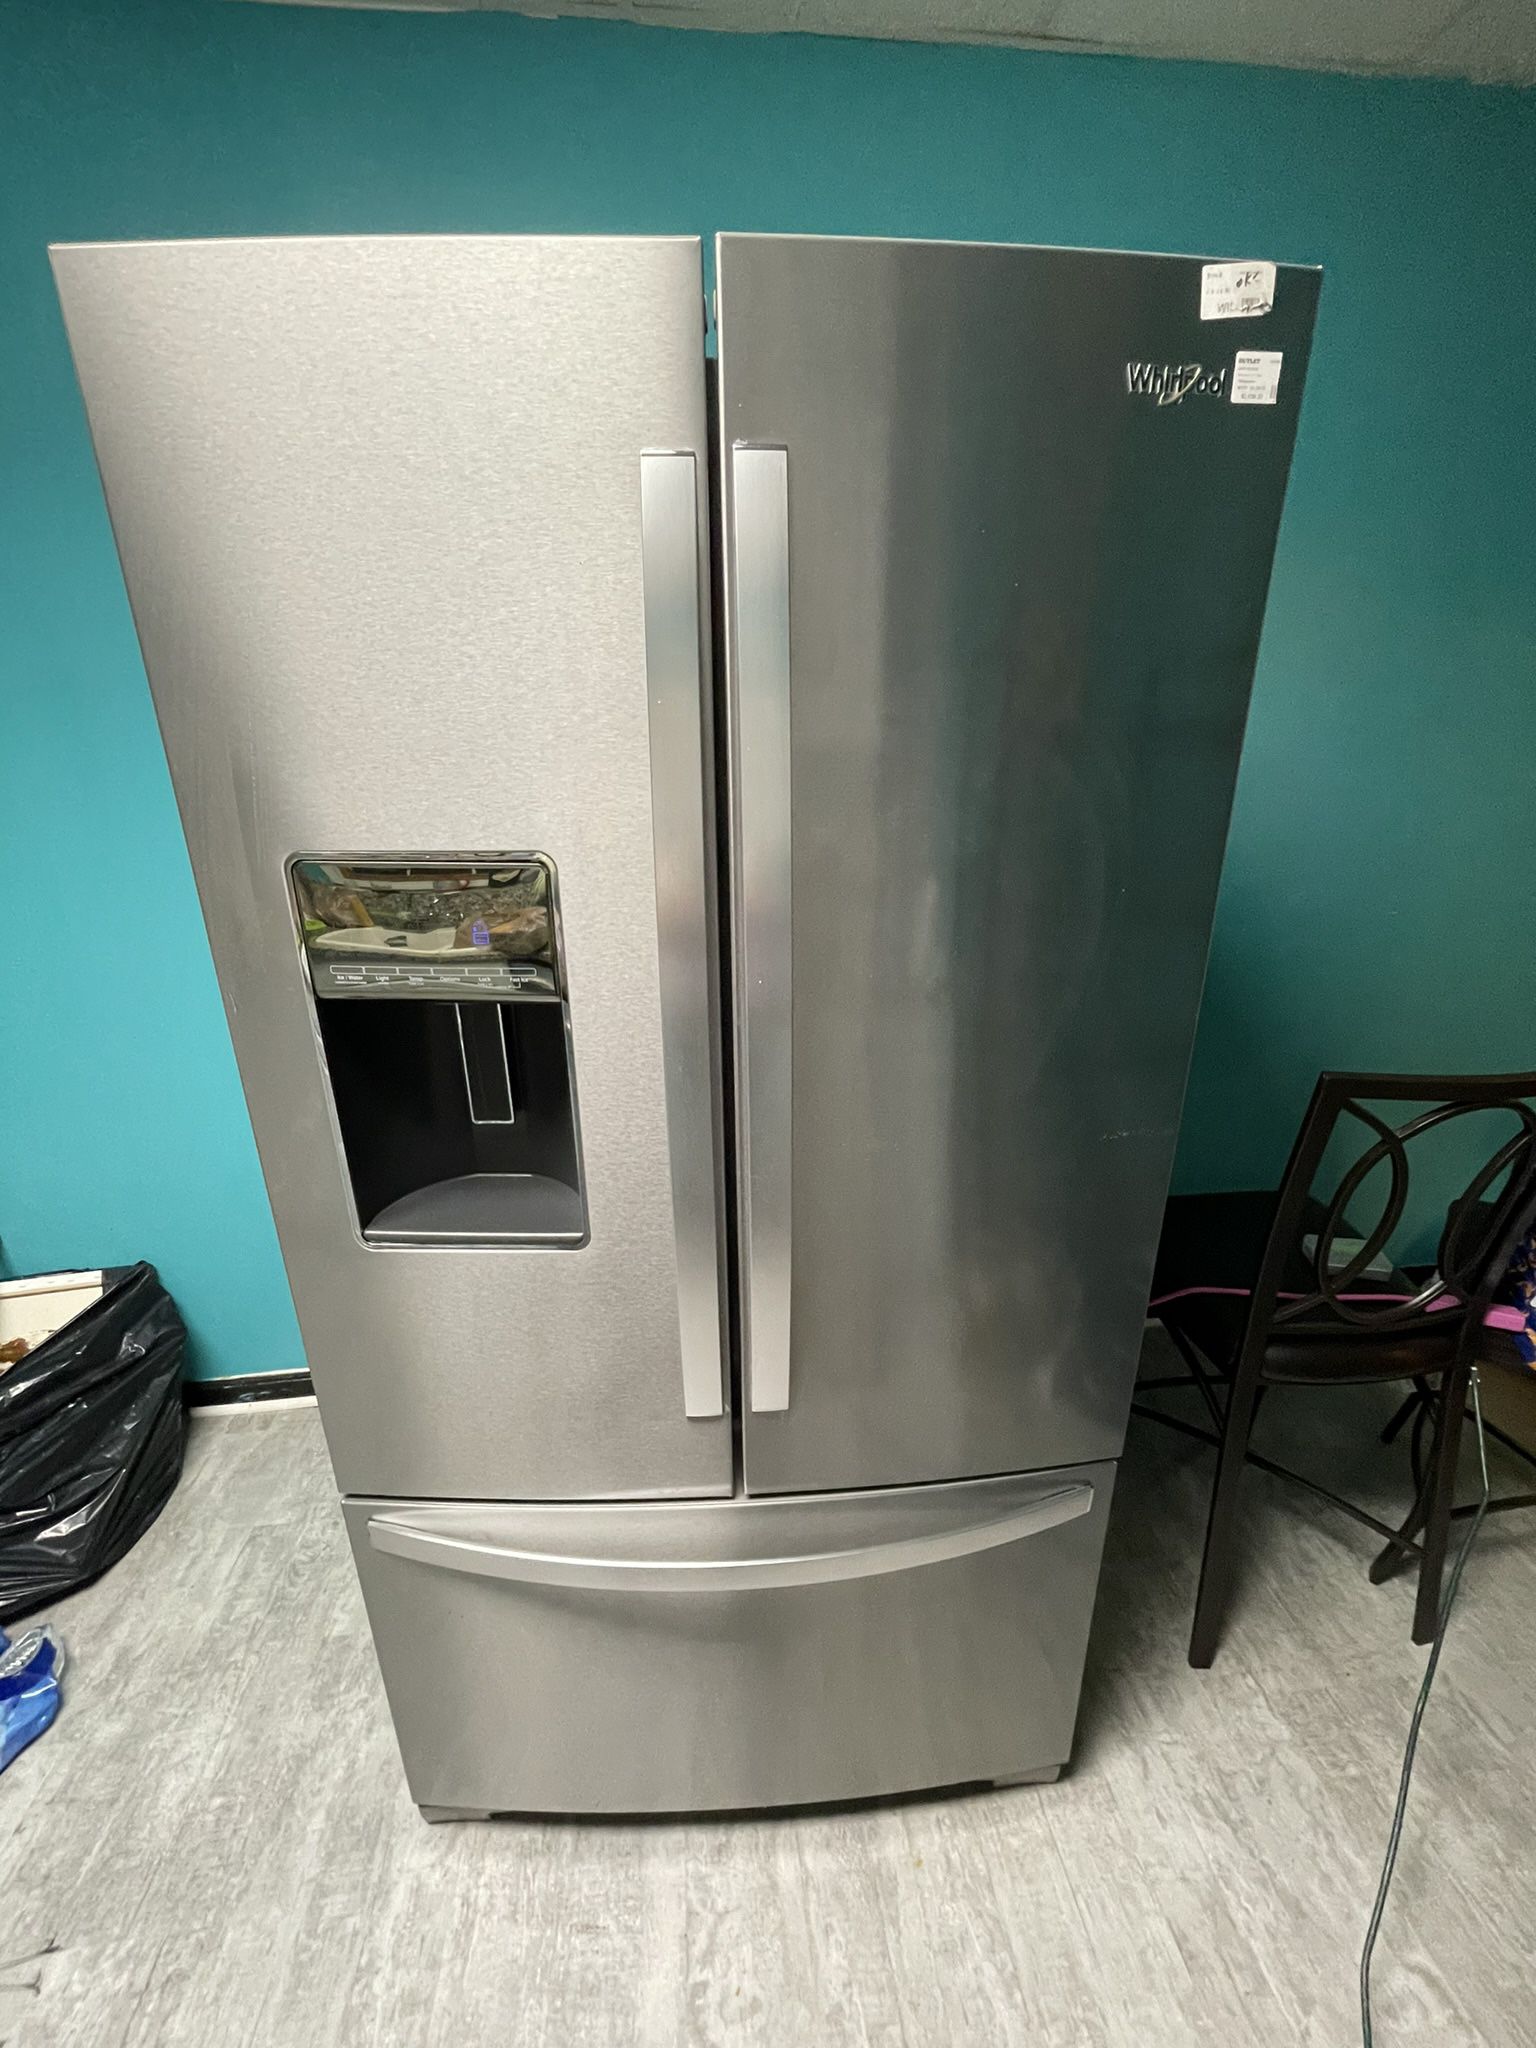 Whirlpool Stainless Steel Refrigerator 